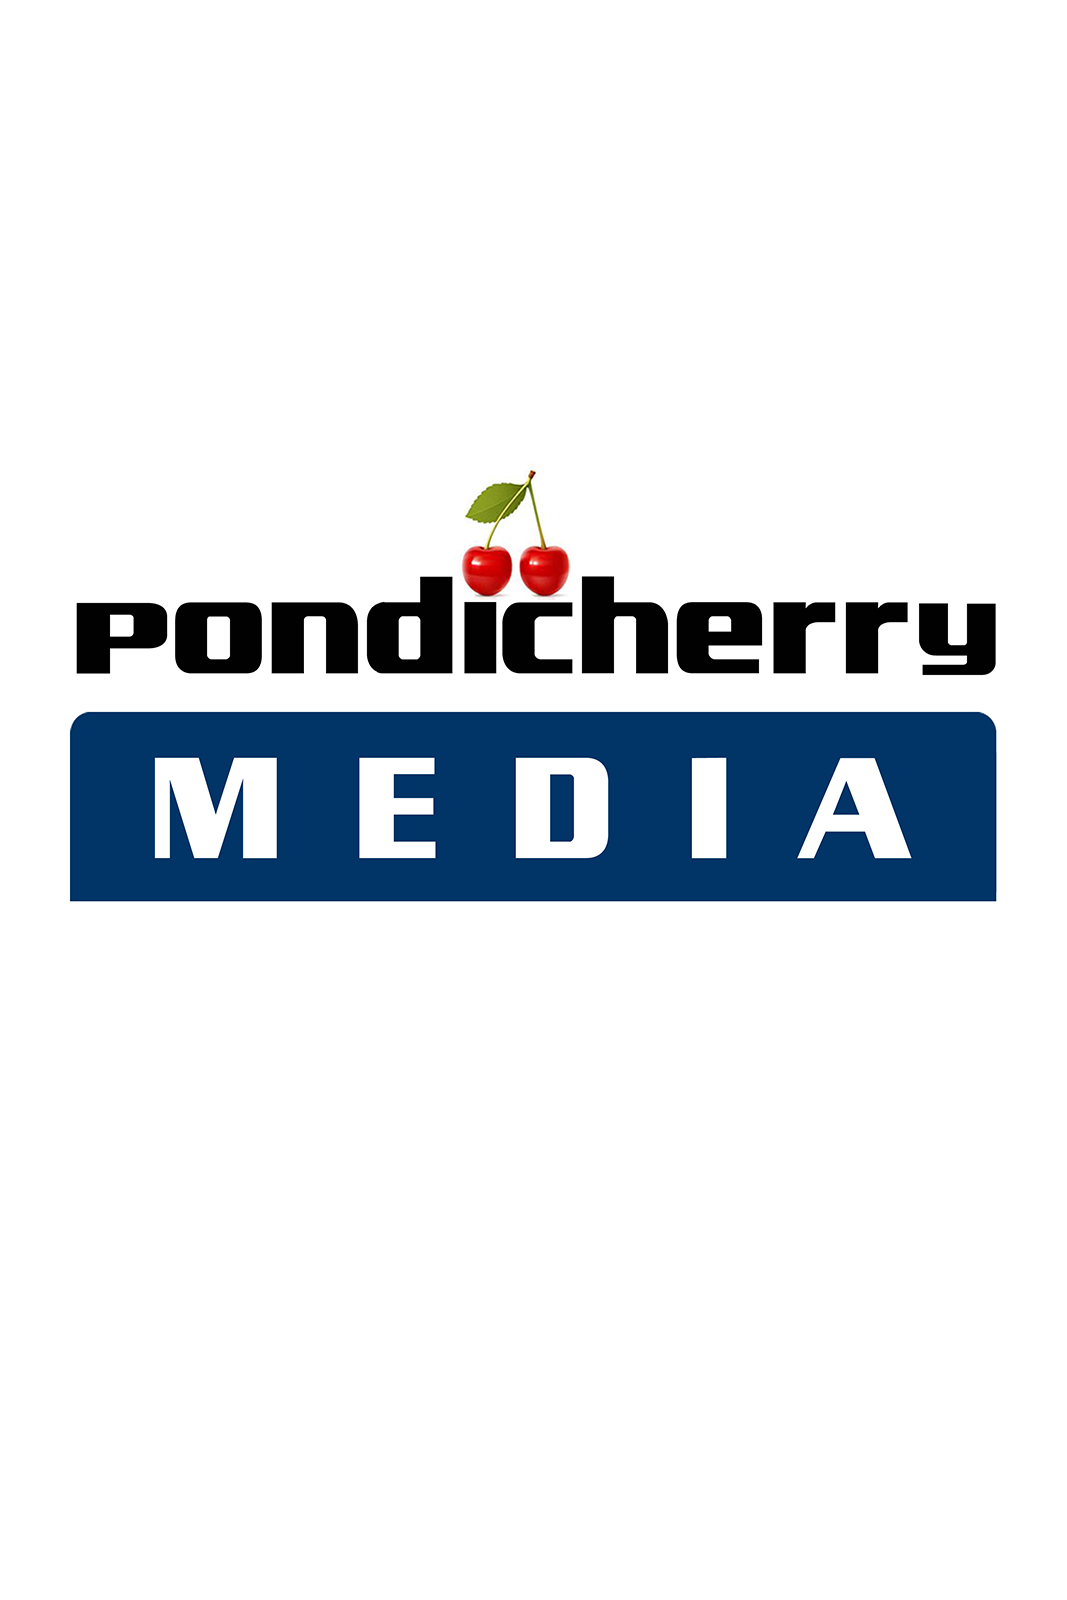 Pondicherry Media|Architect|Professional Services